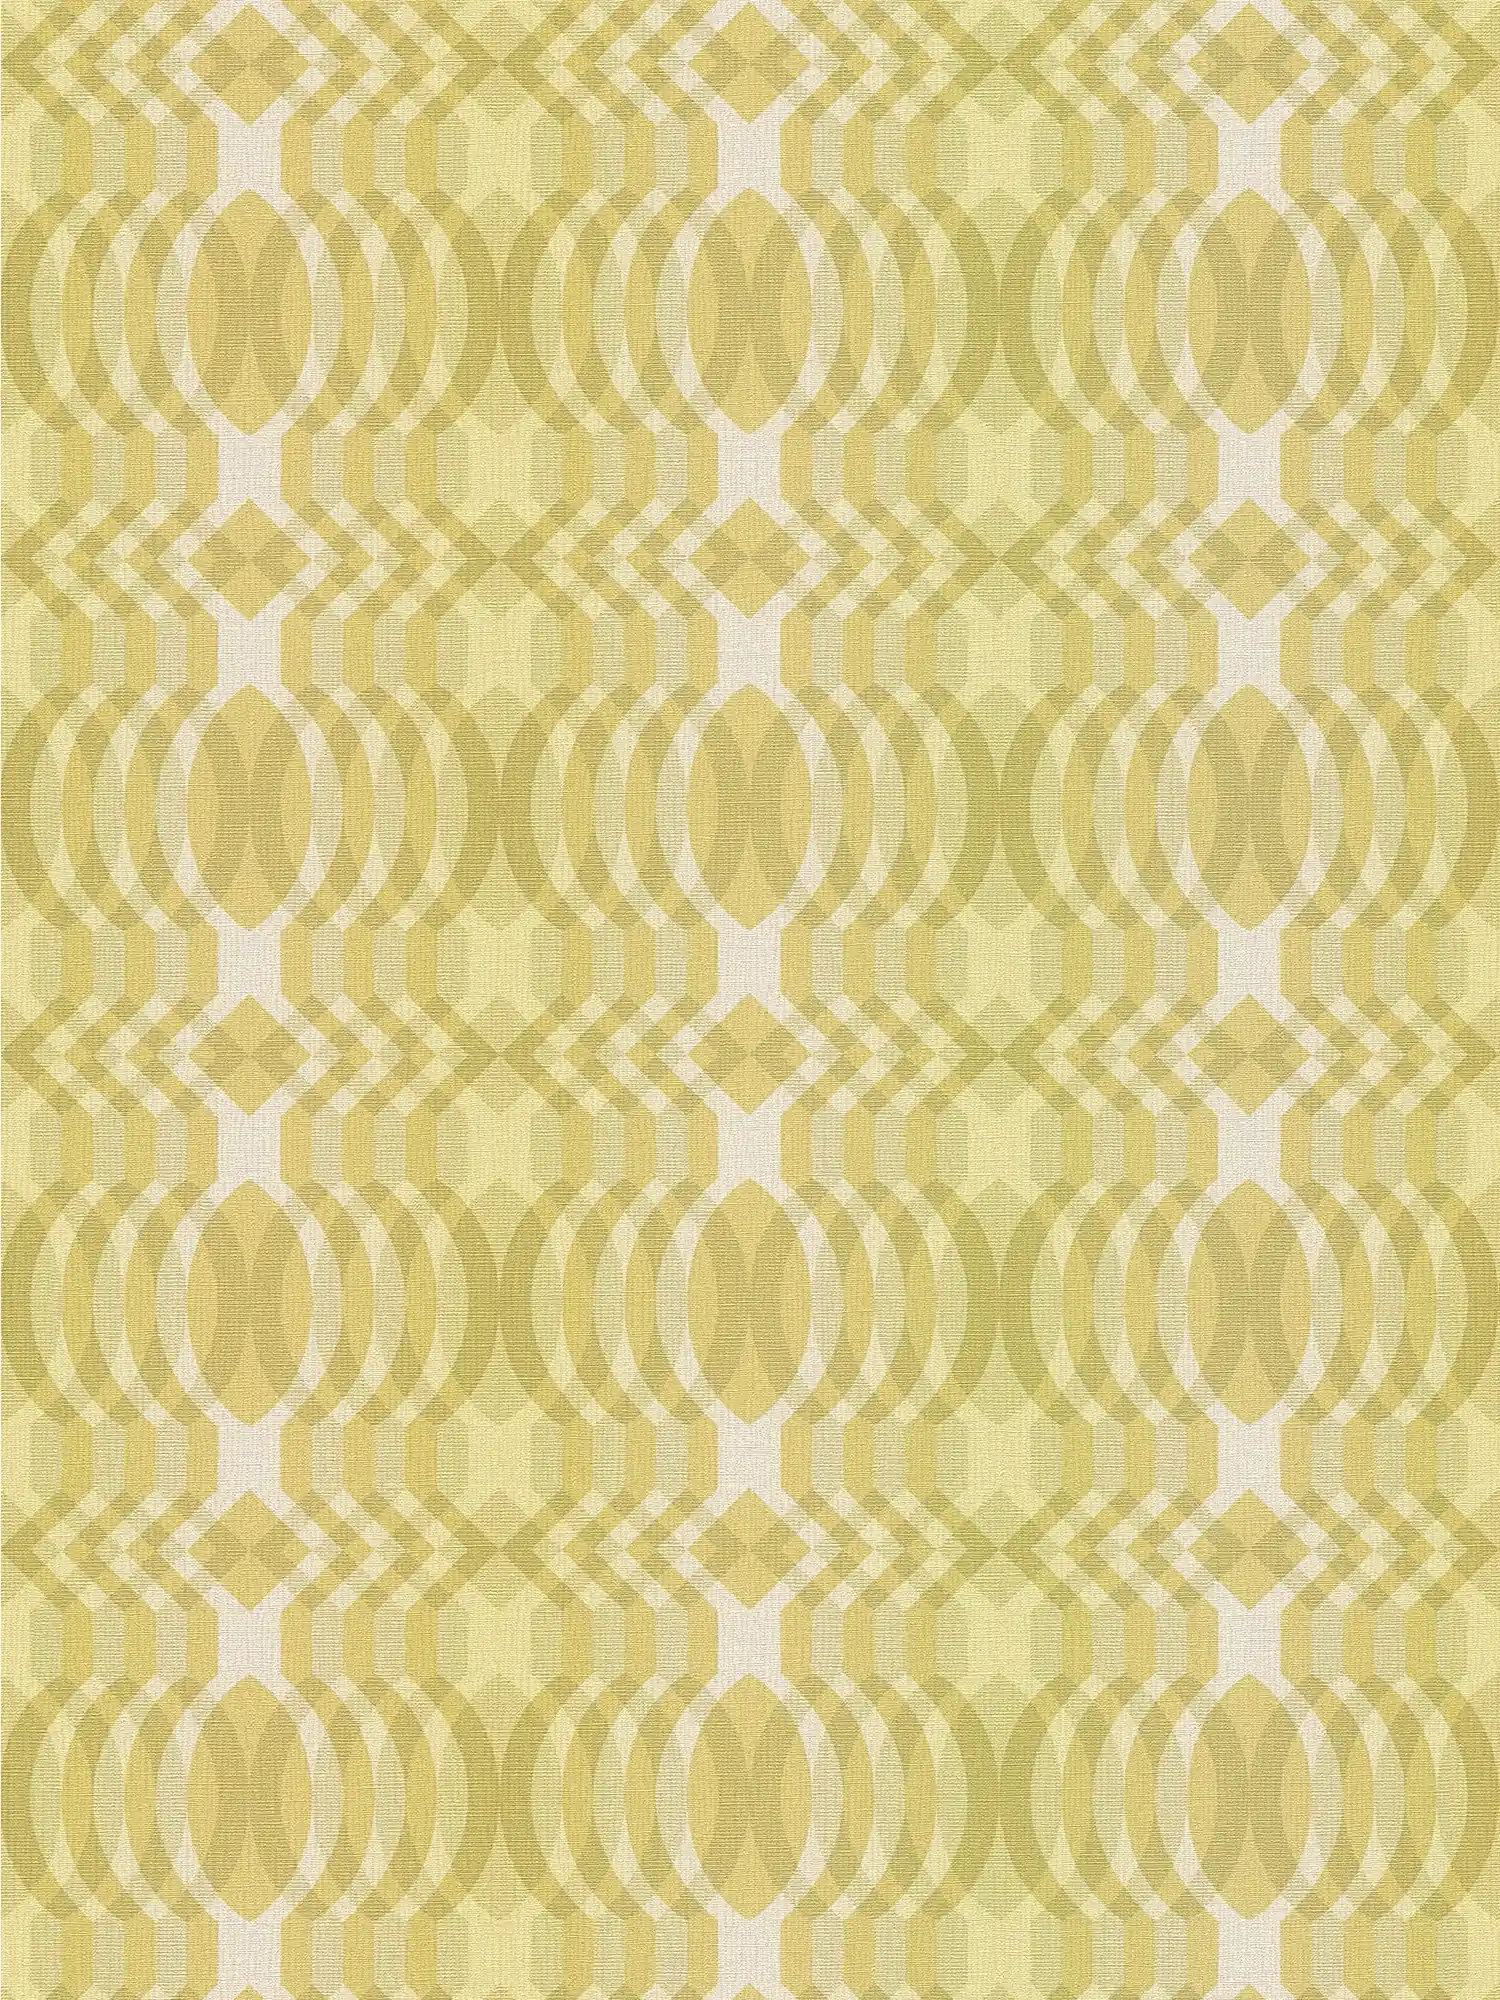         Non-woven wallpaper in retro style with geometric pattern - green, cream, white
    